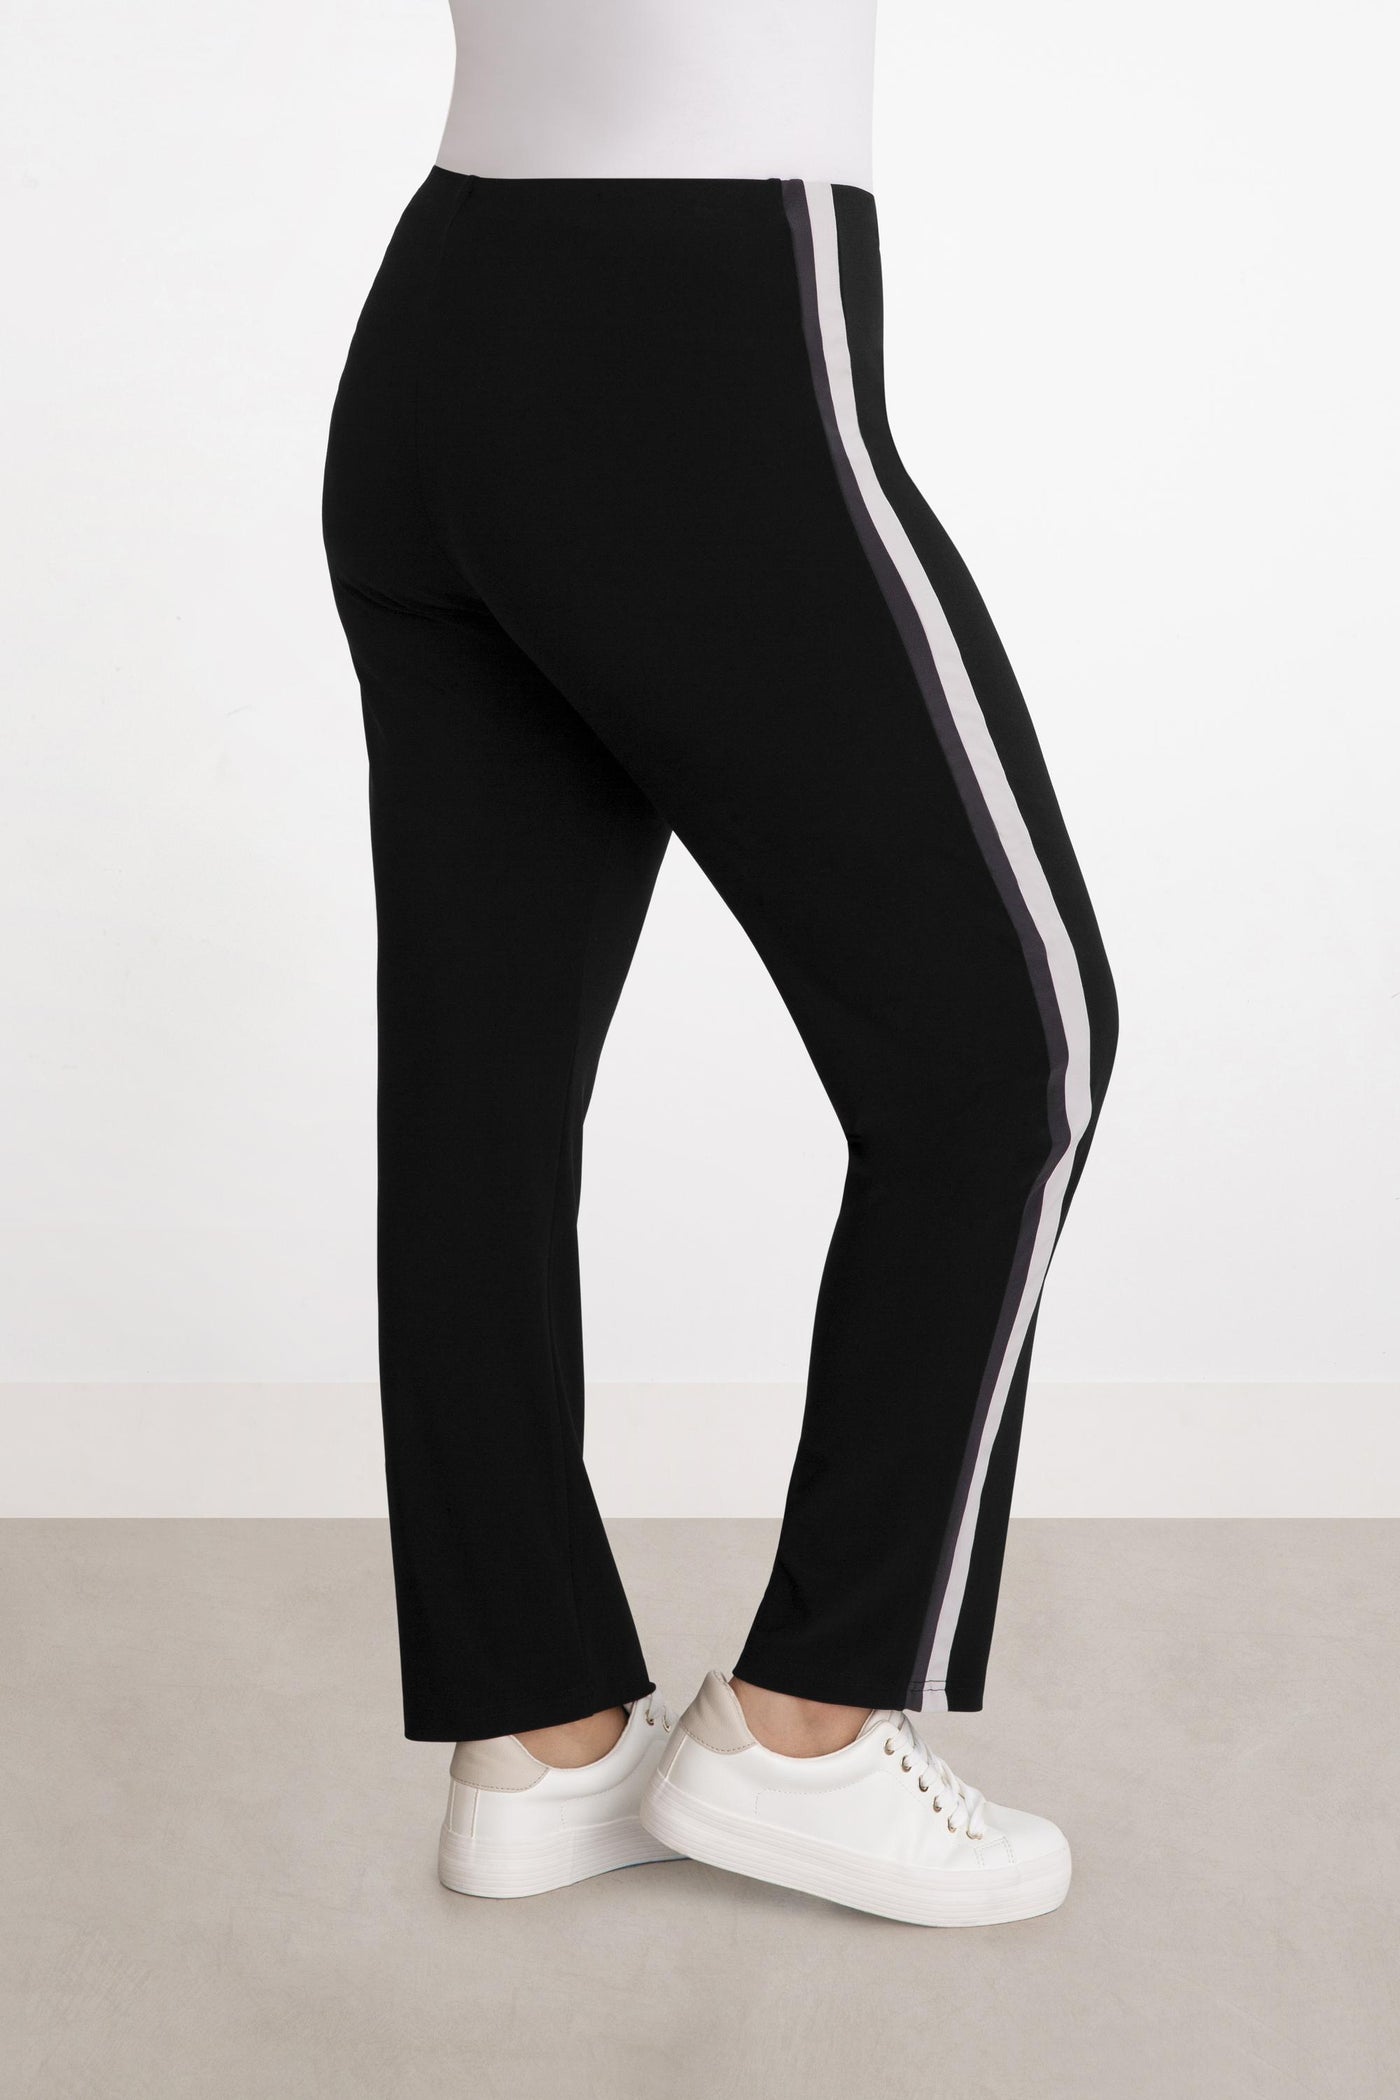 Sympli Underline Narrow Pants Style 27245 Color Black 